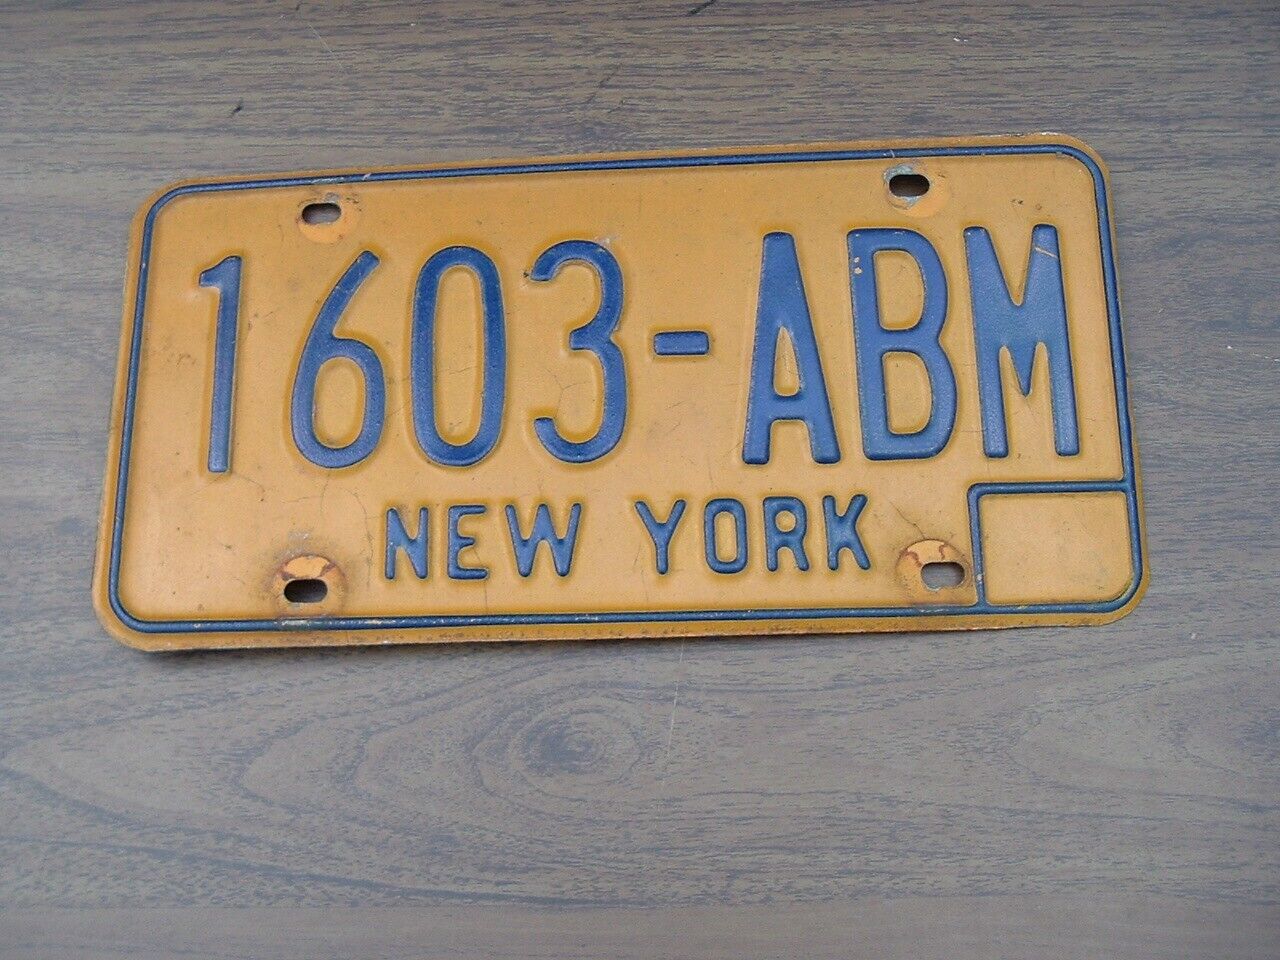 New York State License Plate 1603 ABM